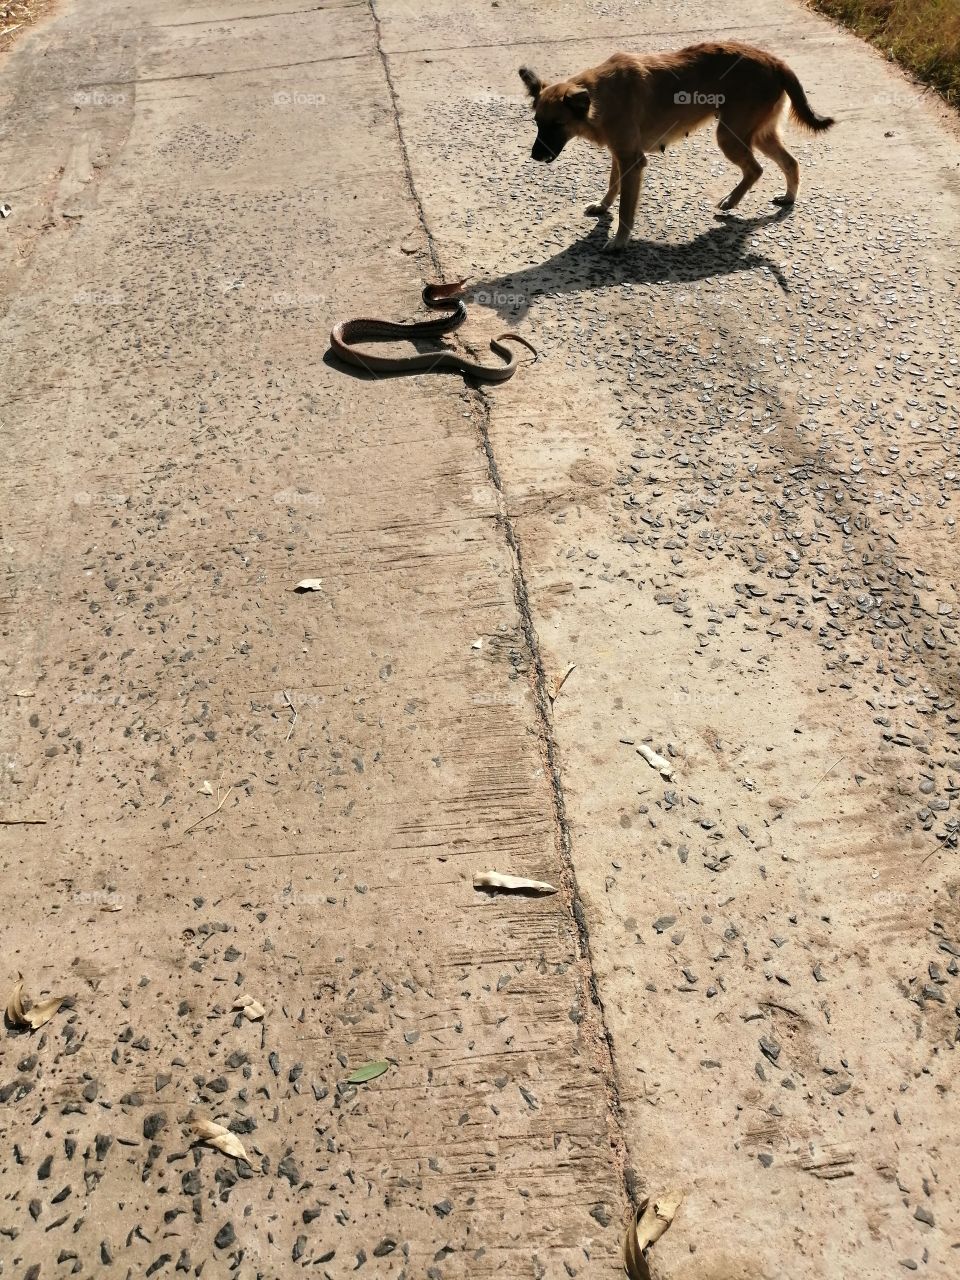 Dog killing cobra